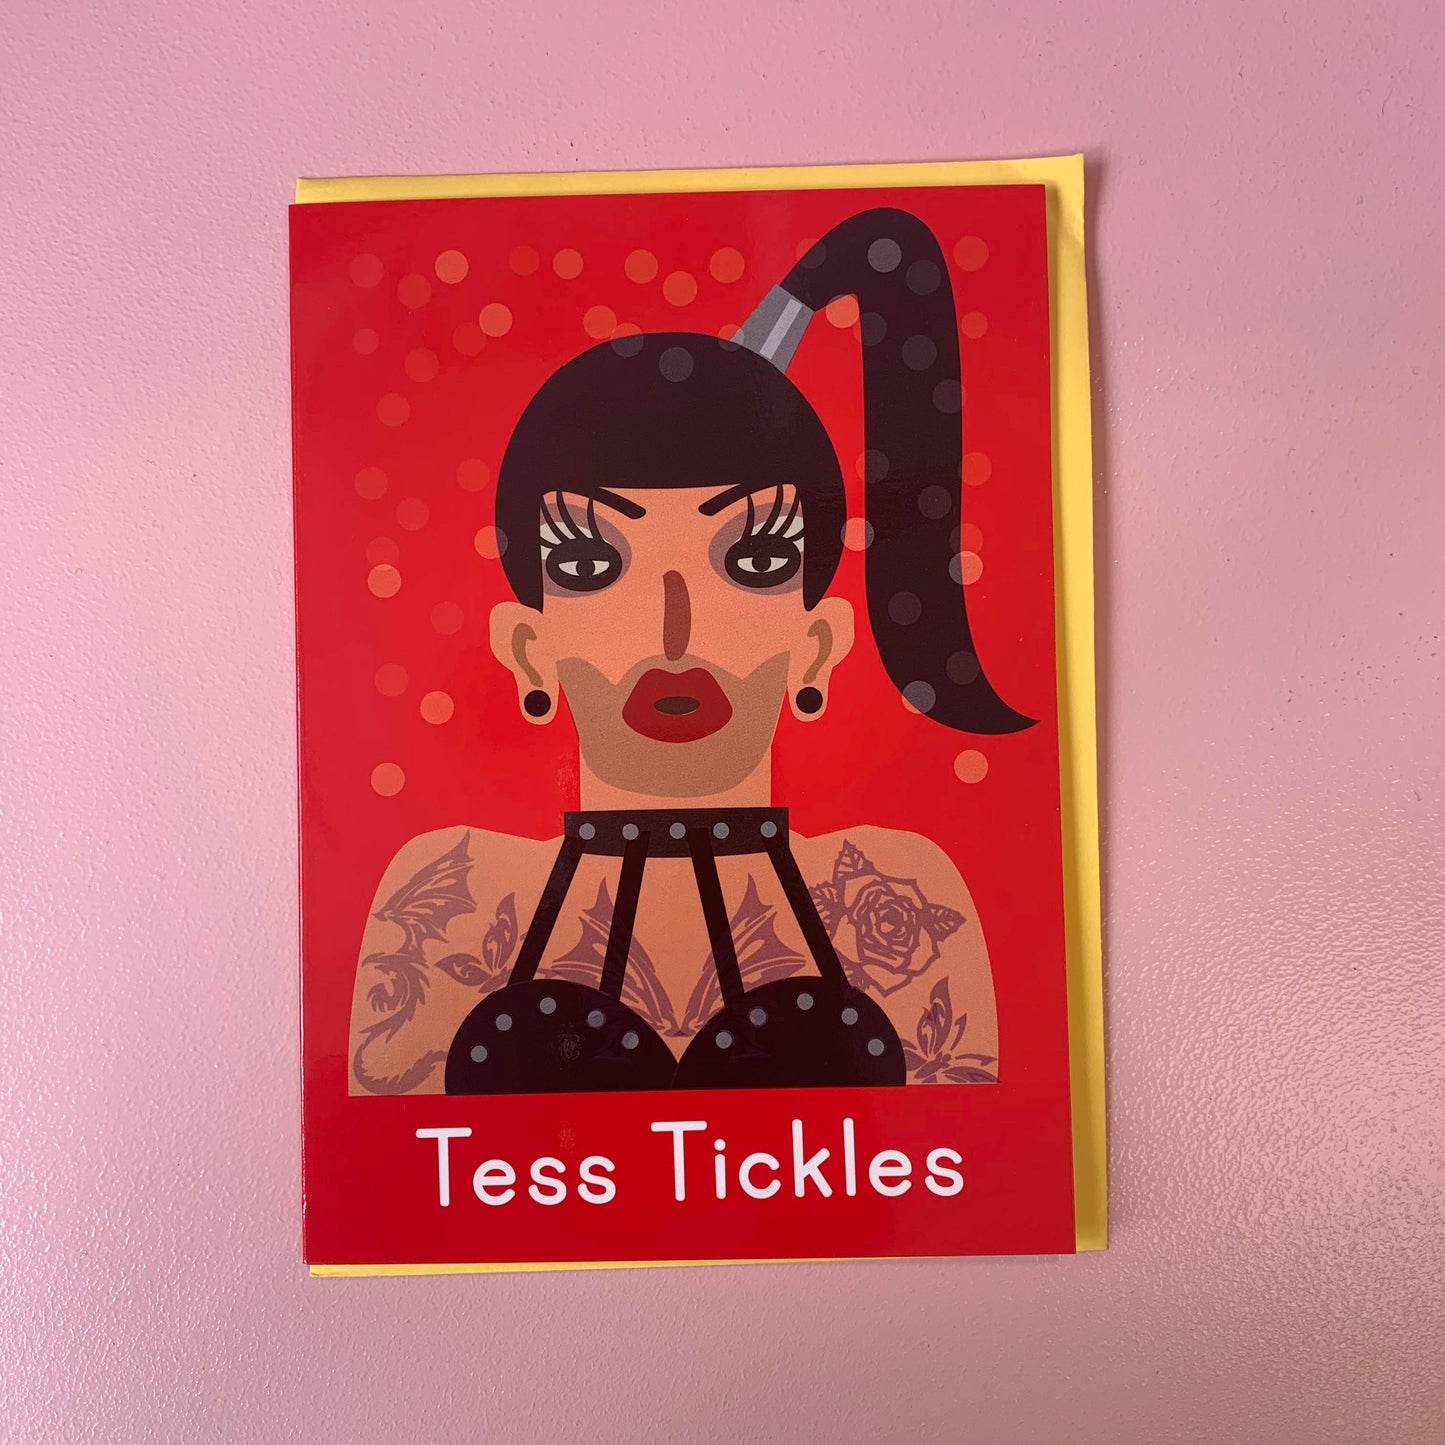 Tess Tickles